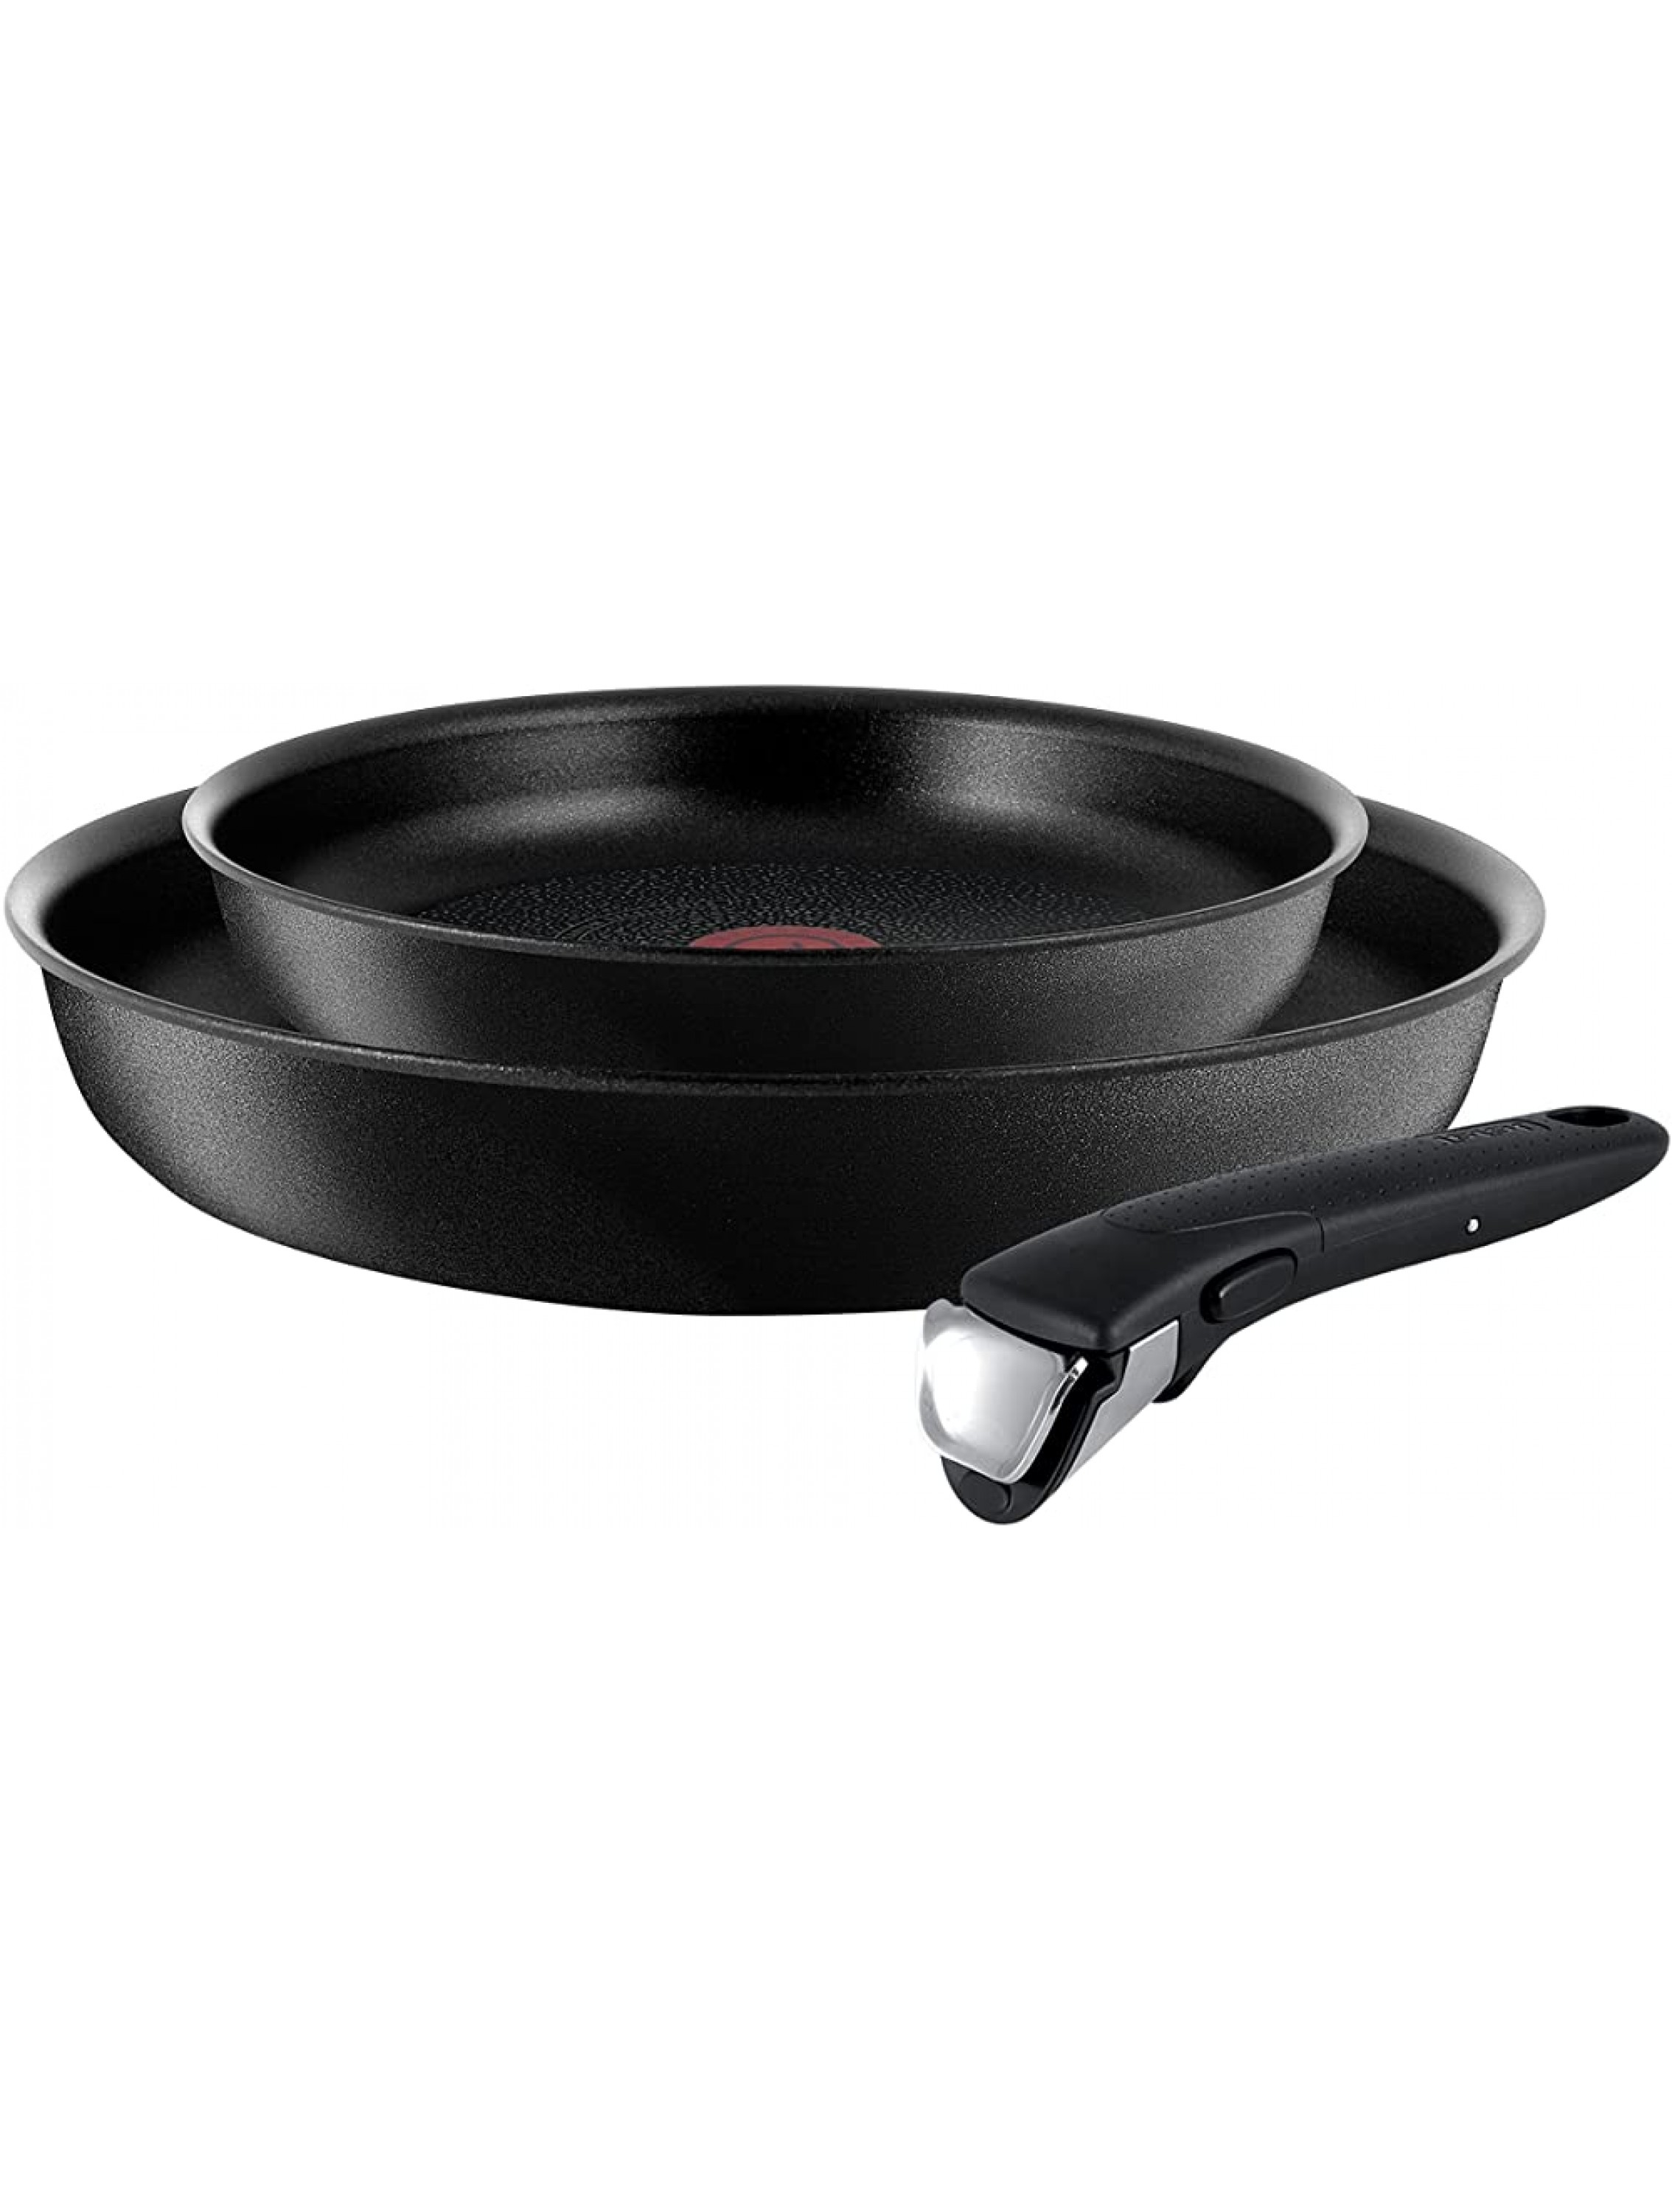 T-fal Ingenio Expertise Nonstick Cookware Set-Fry Pan 3 piece Black - BHA21L161